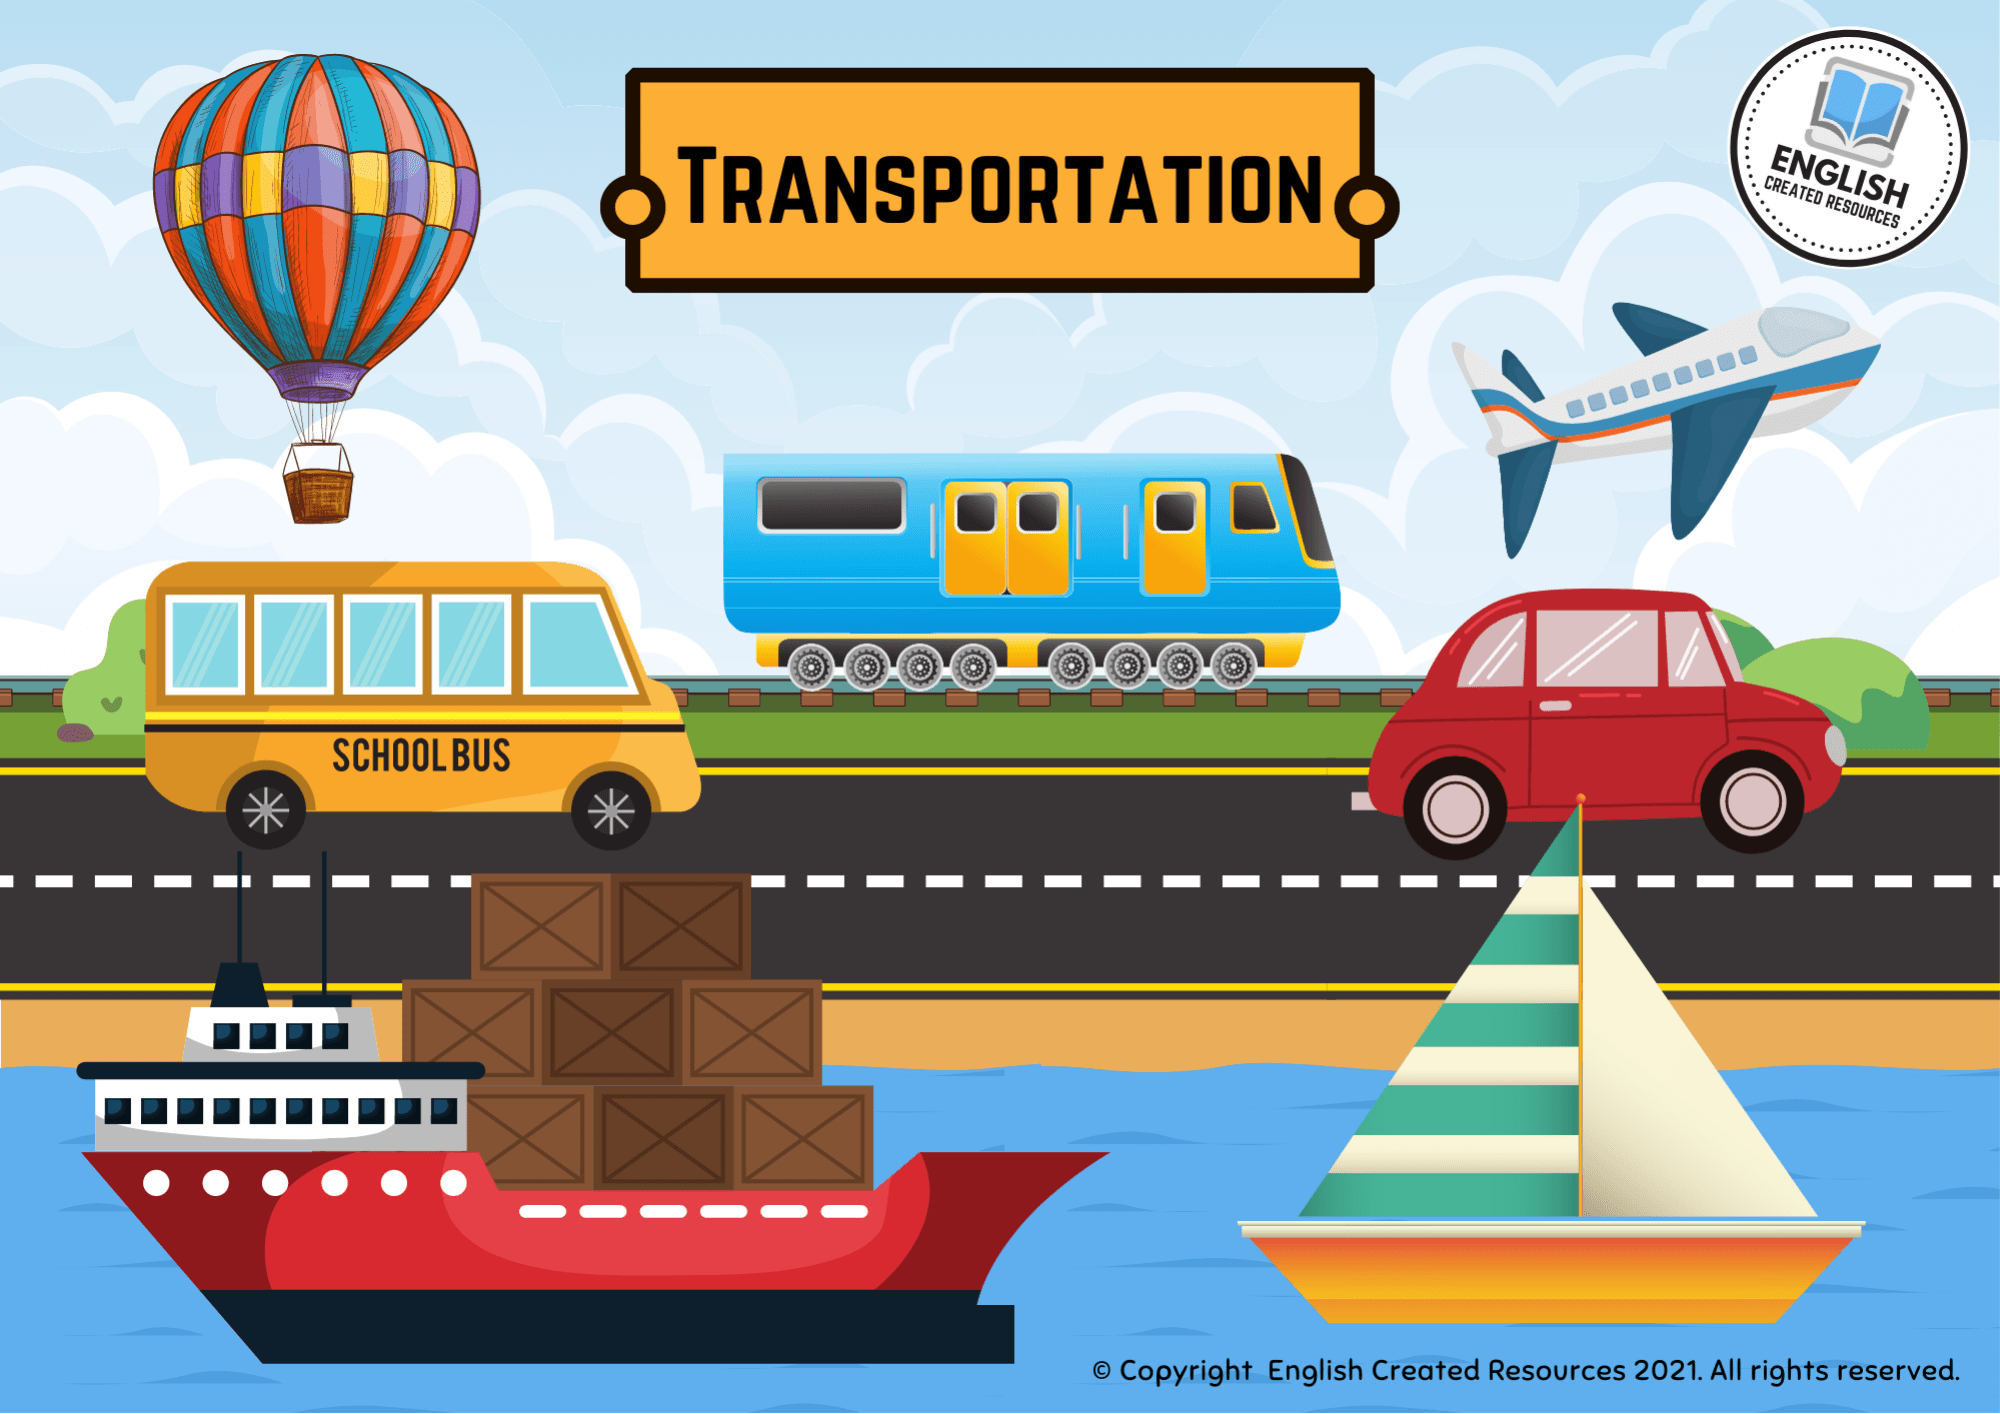 Transportation flashcards